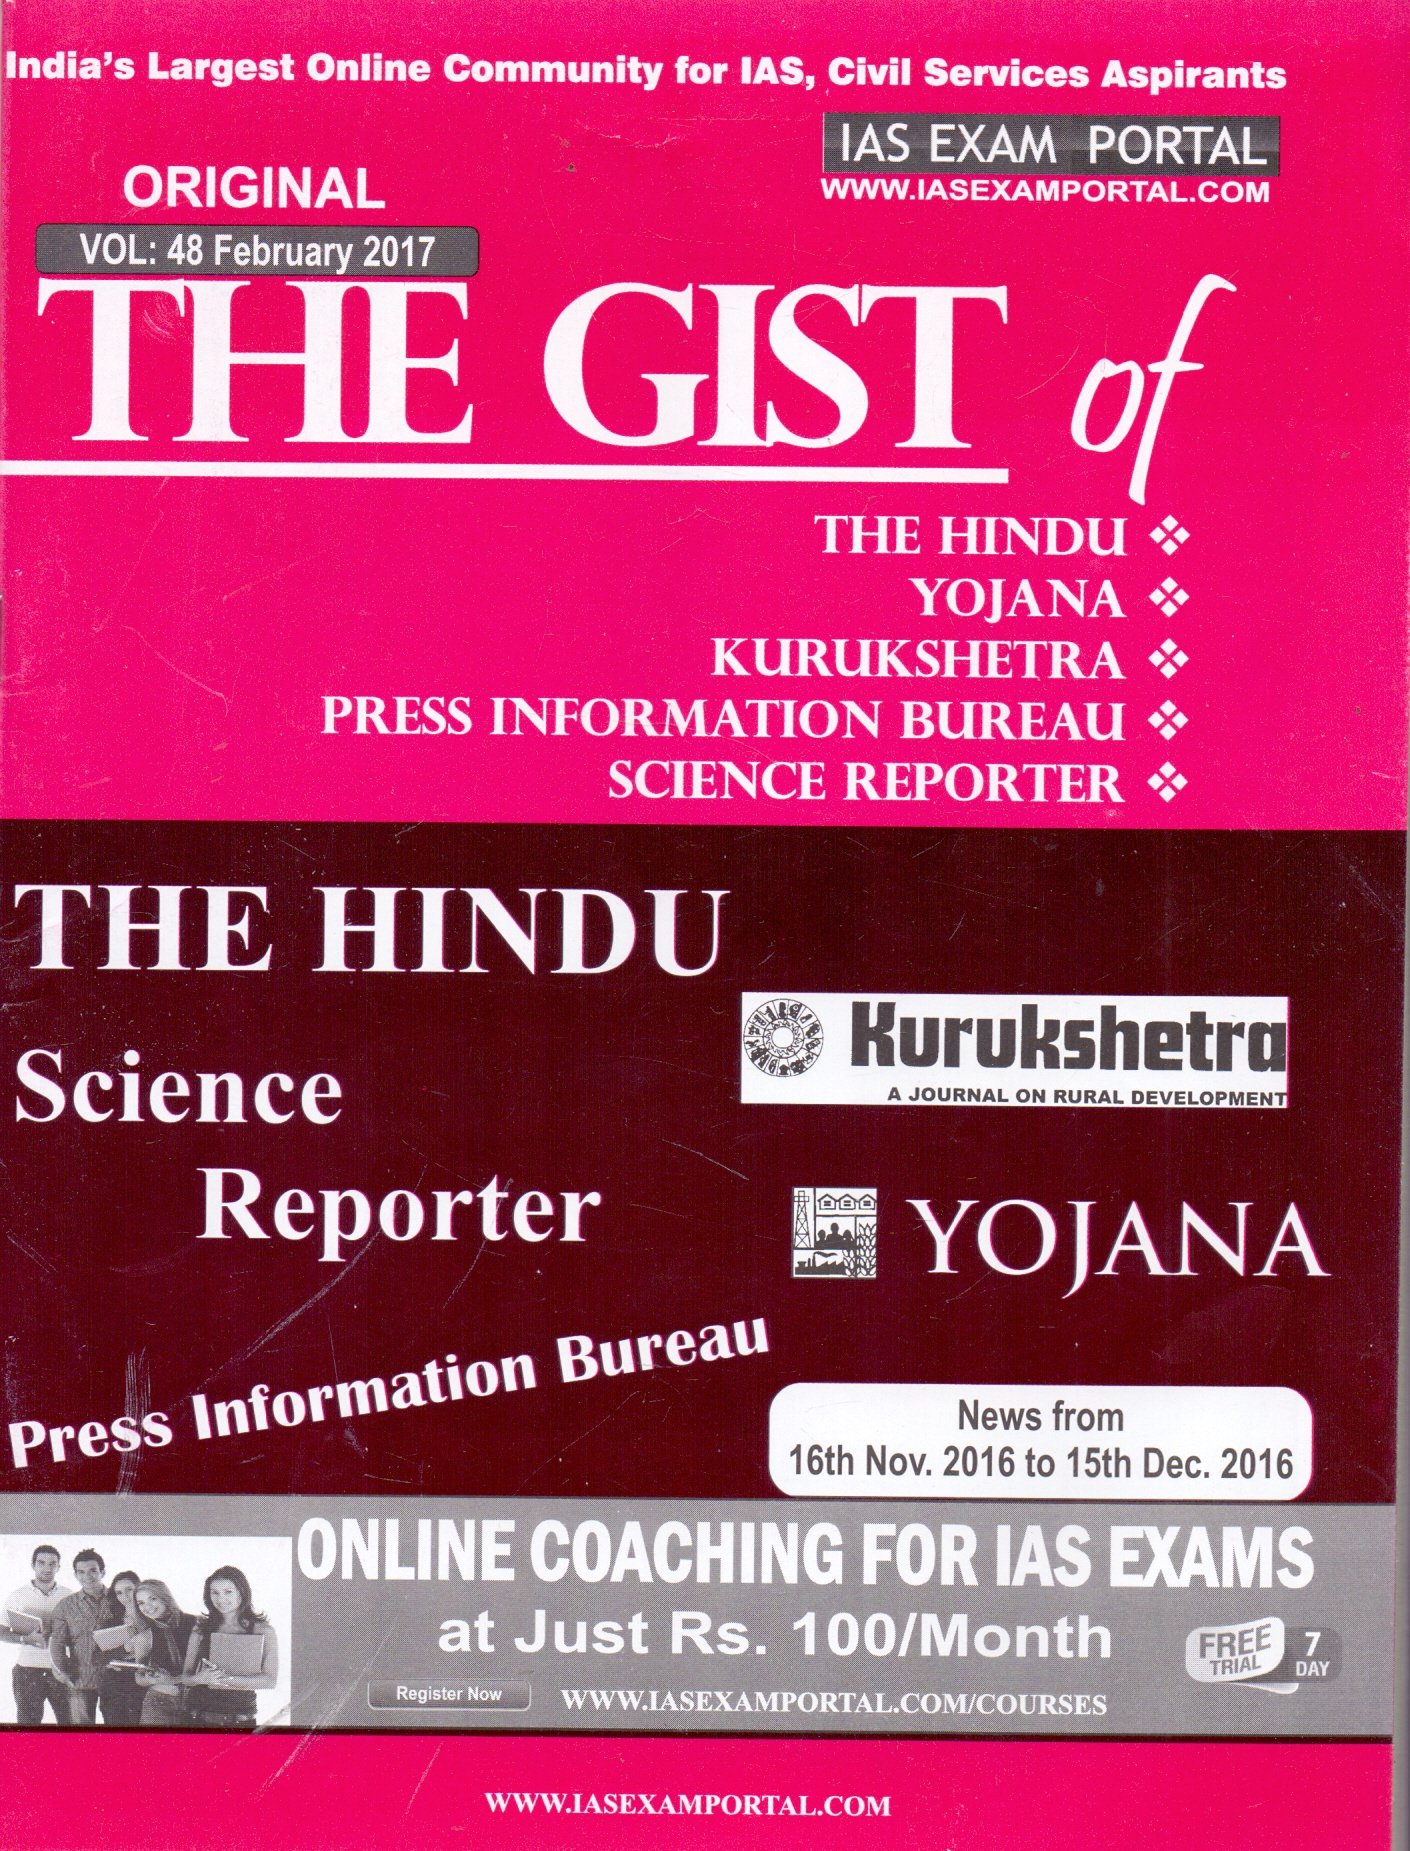 the gist of Kurukshetra, The Hindu